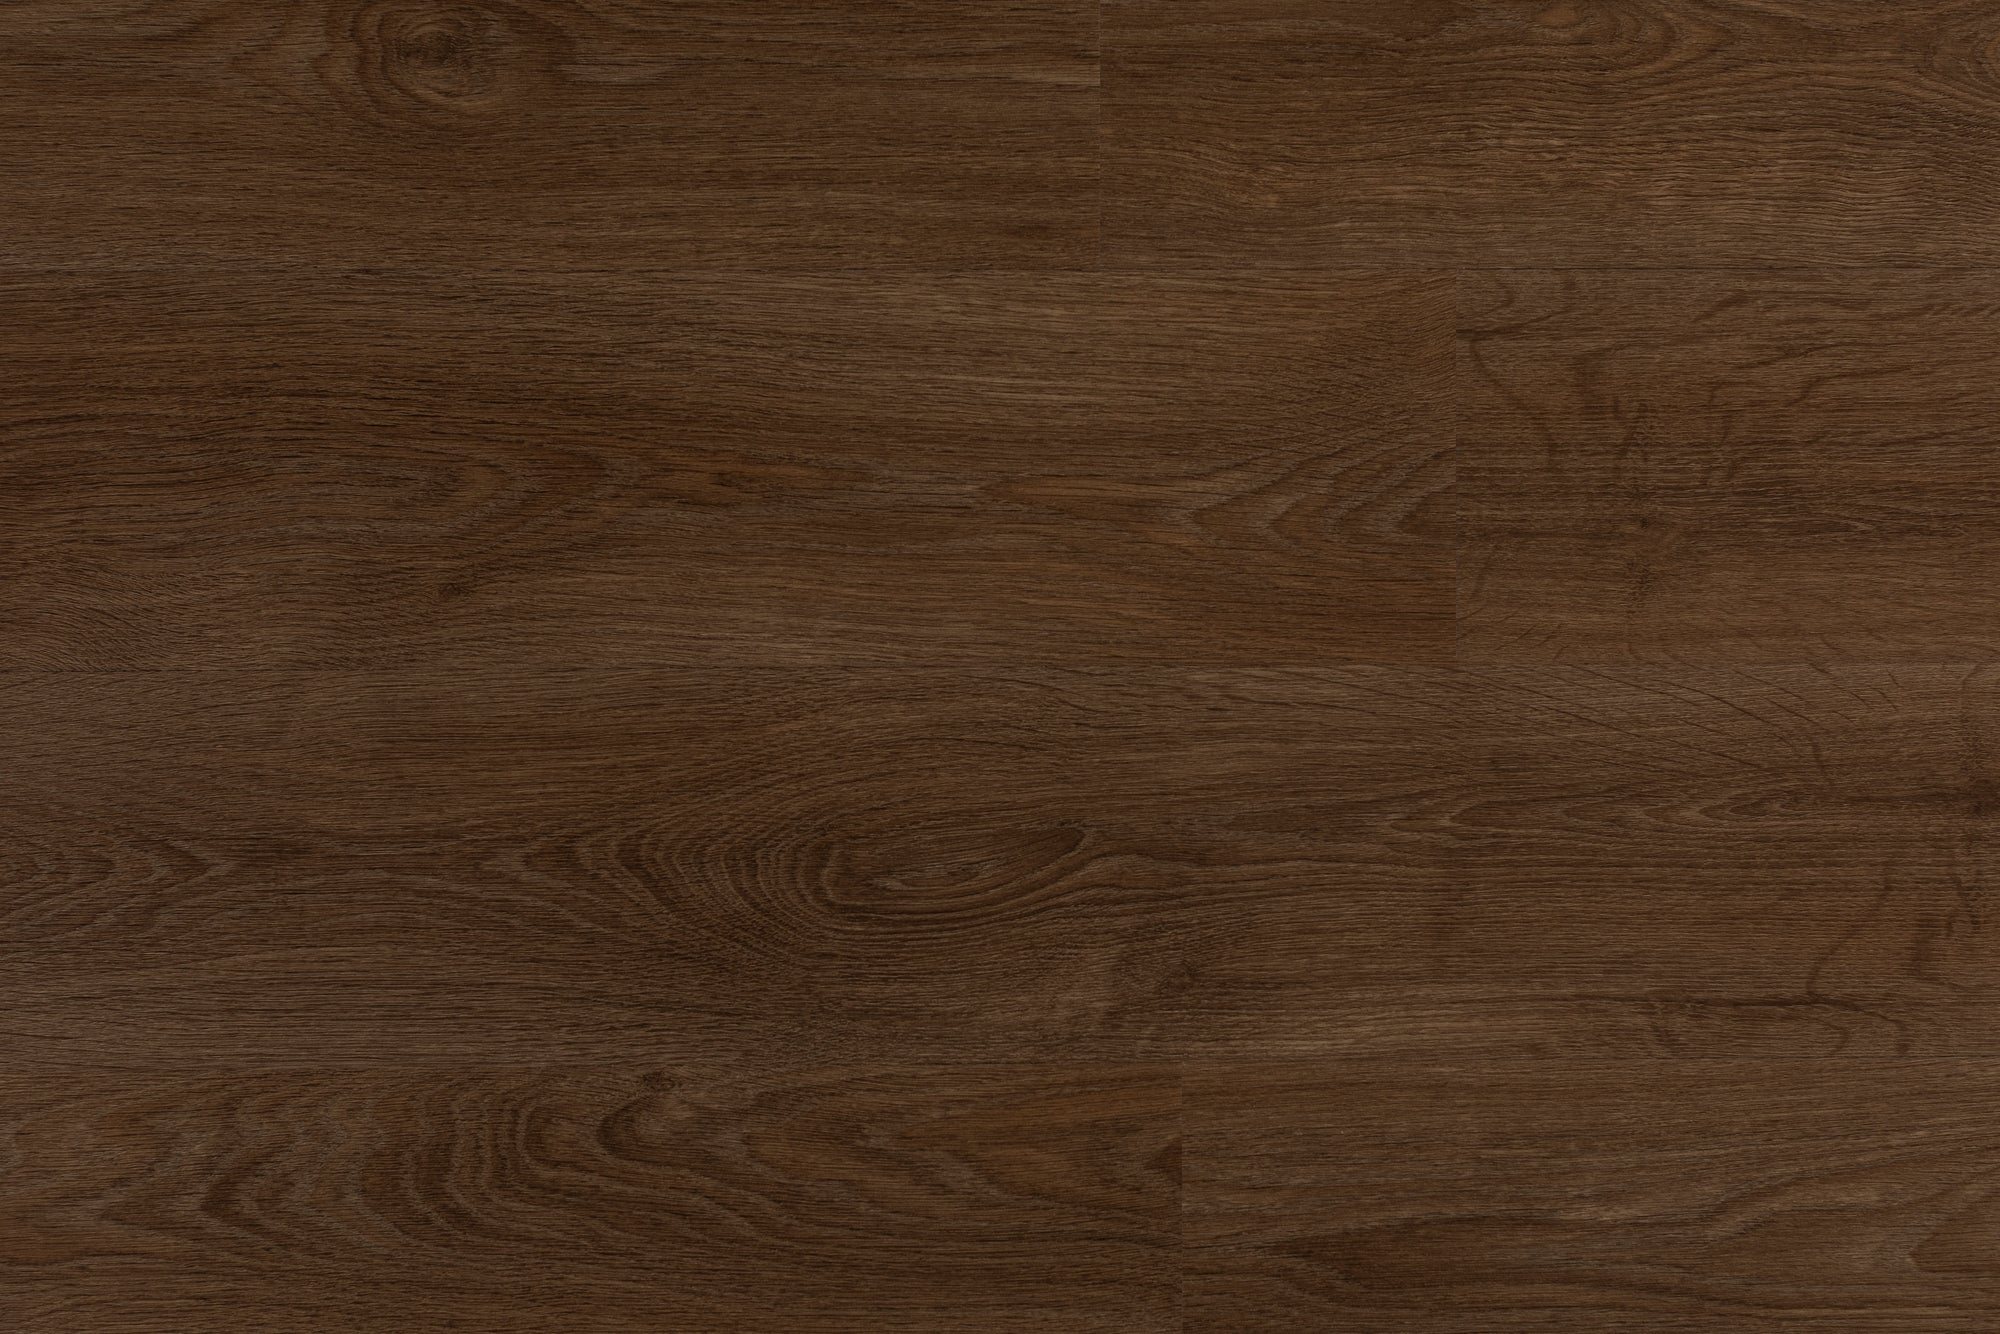 Firwood Maverick  engineered hardwood floor from our Vinyl Flooring collection